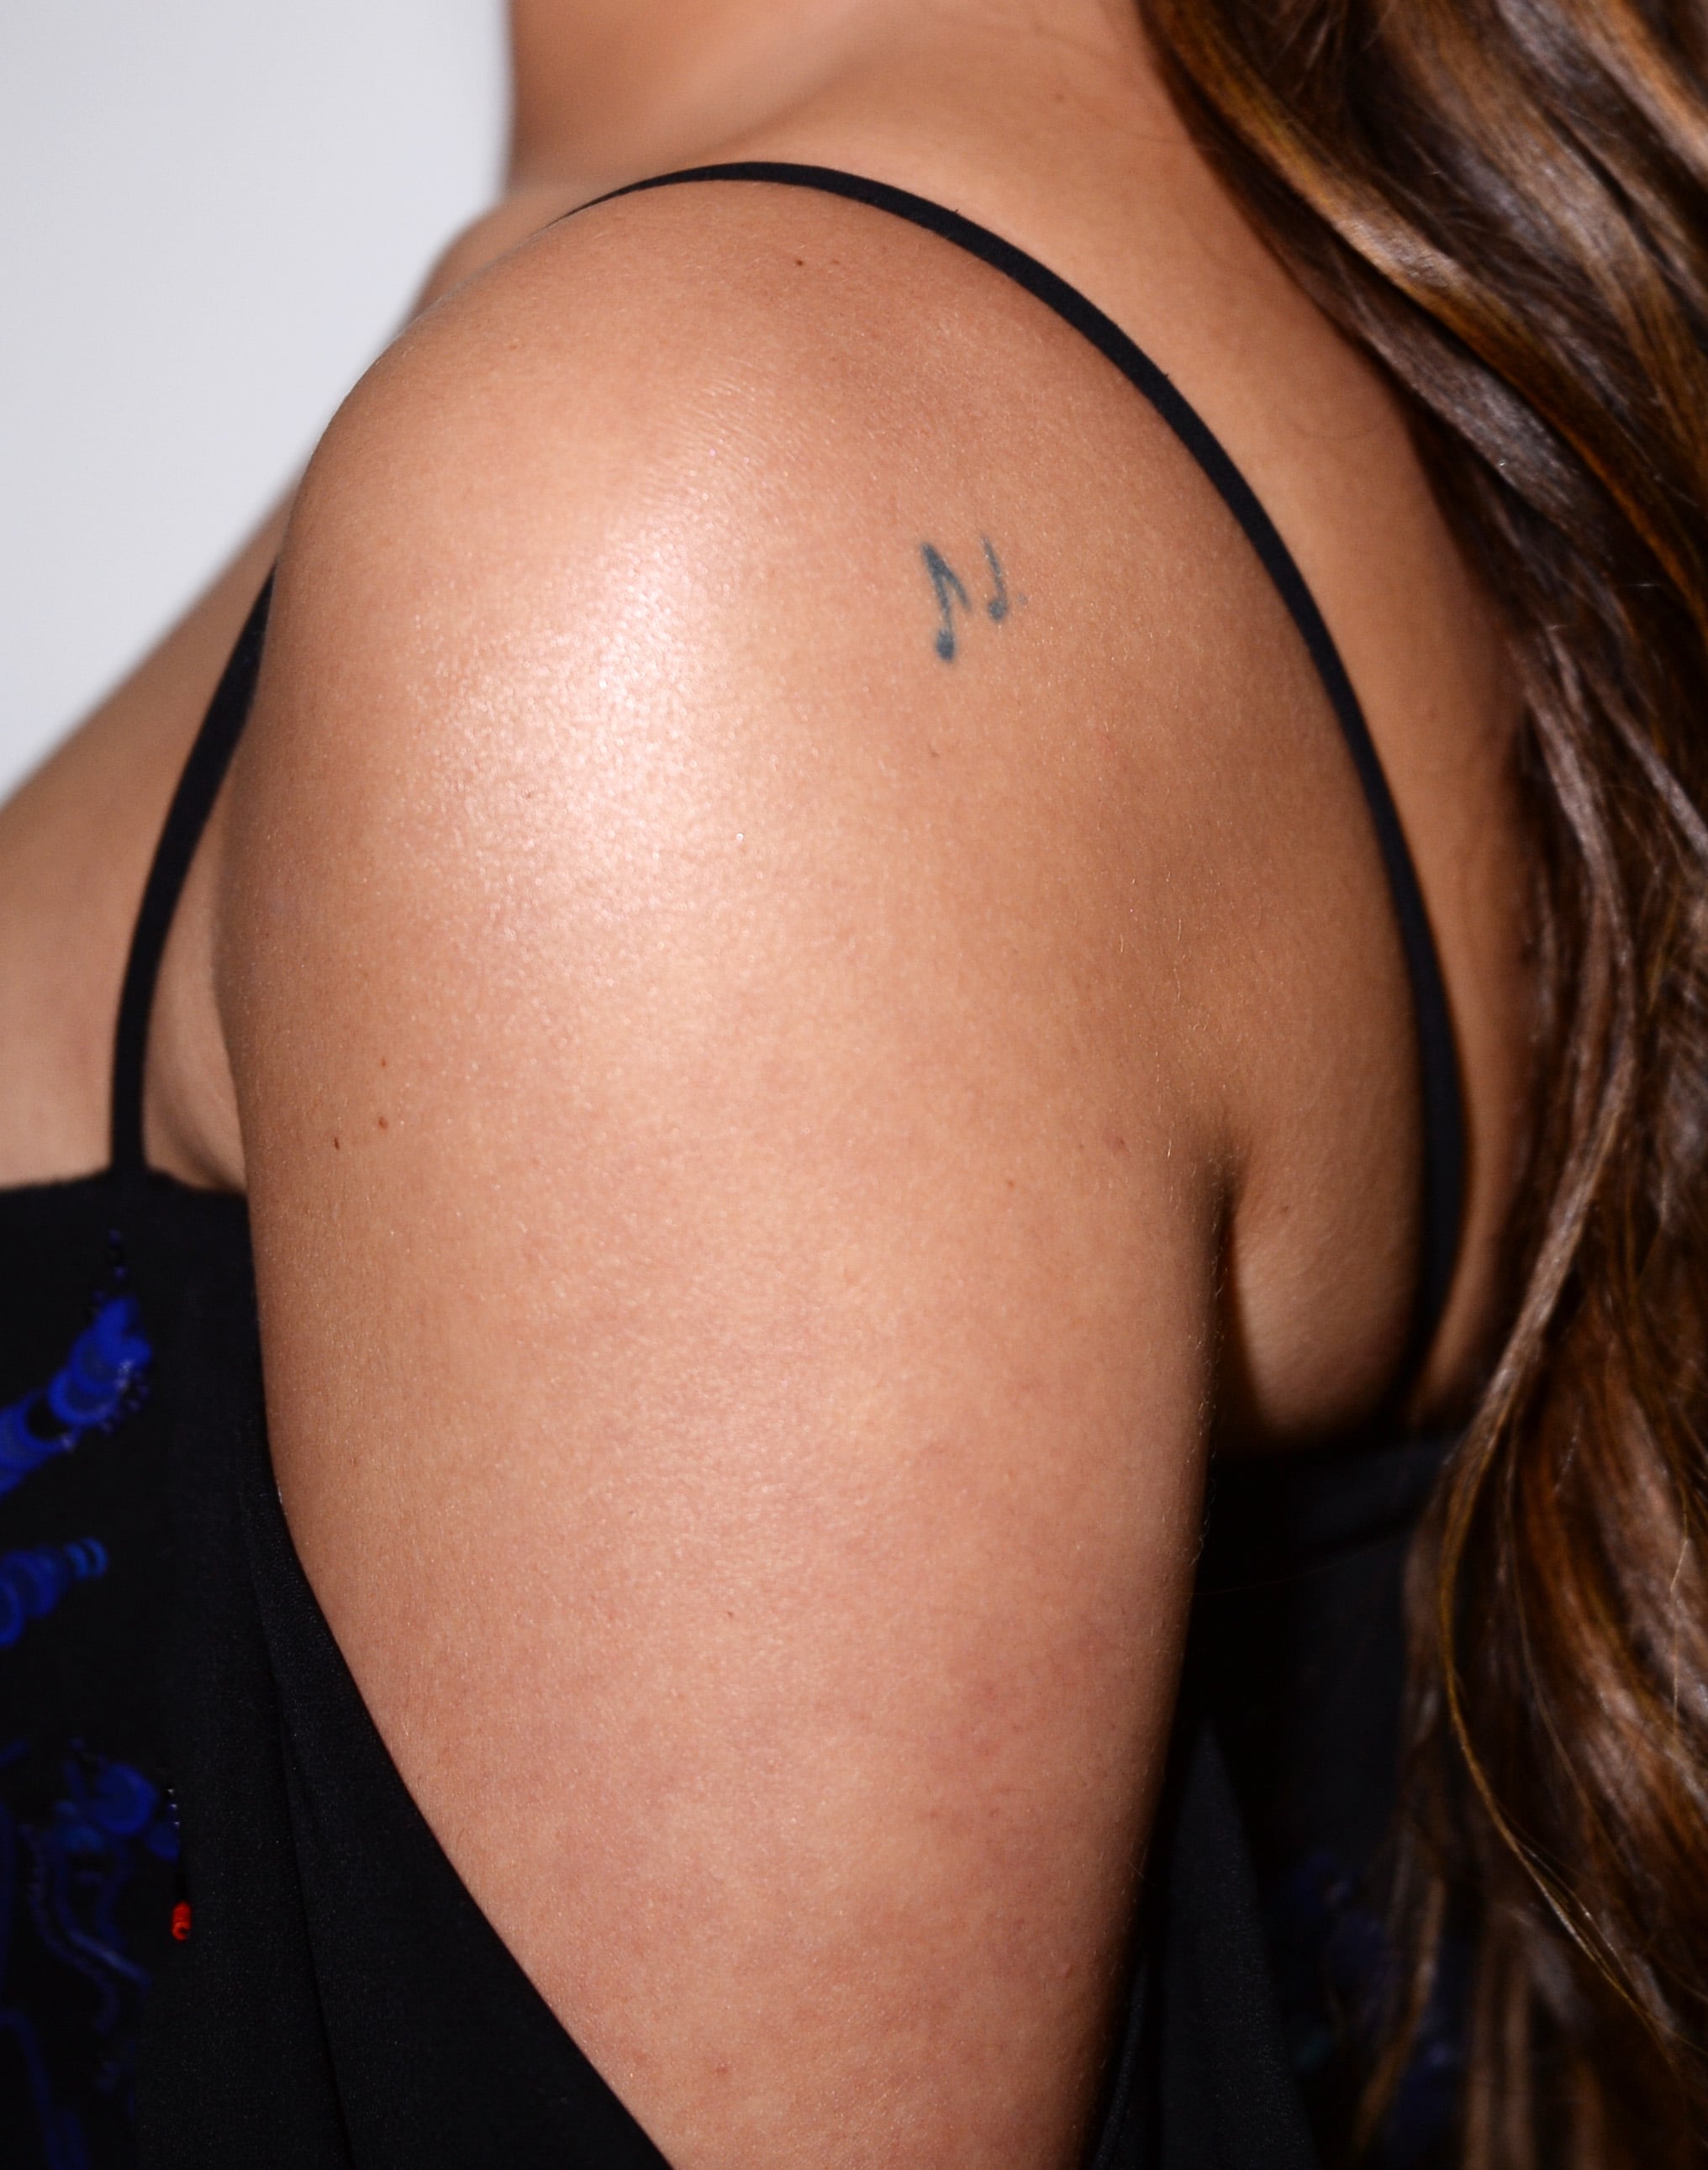 Lea Michele Nude Magazine Cover Reveals Cory Monteith Tattoo  Billboard   Billboard